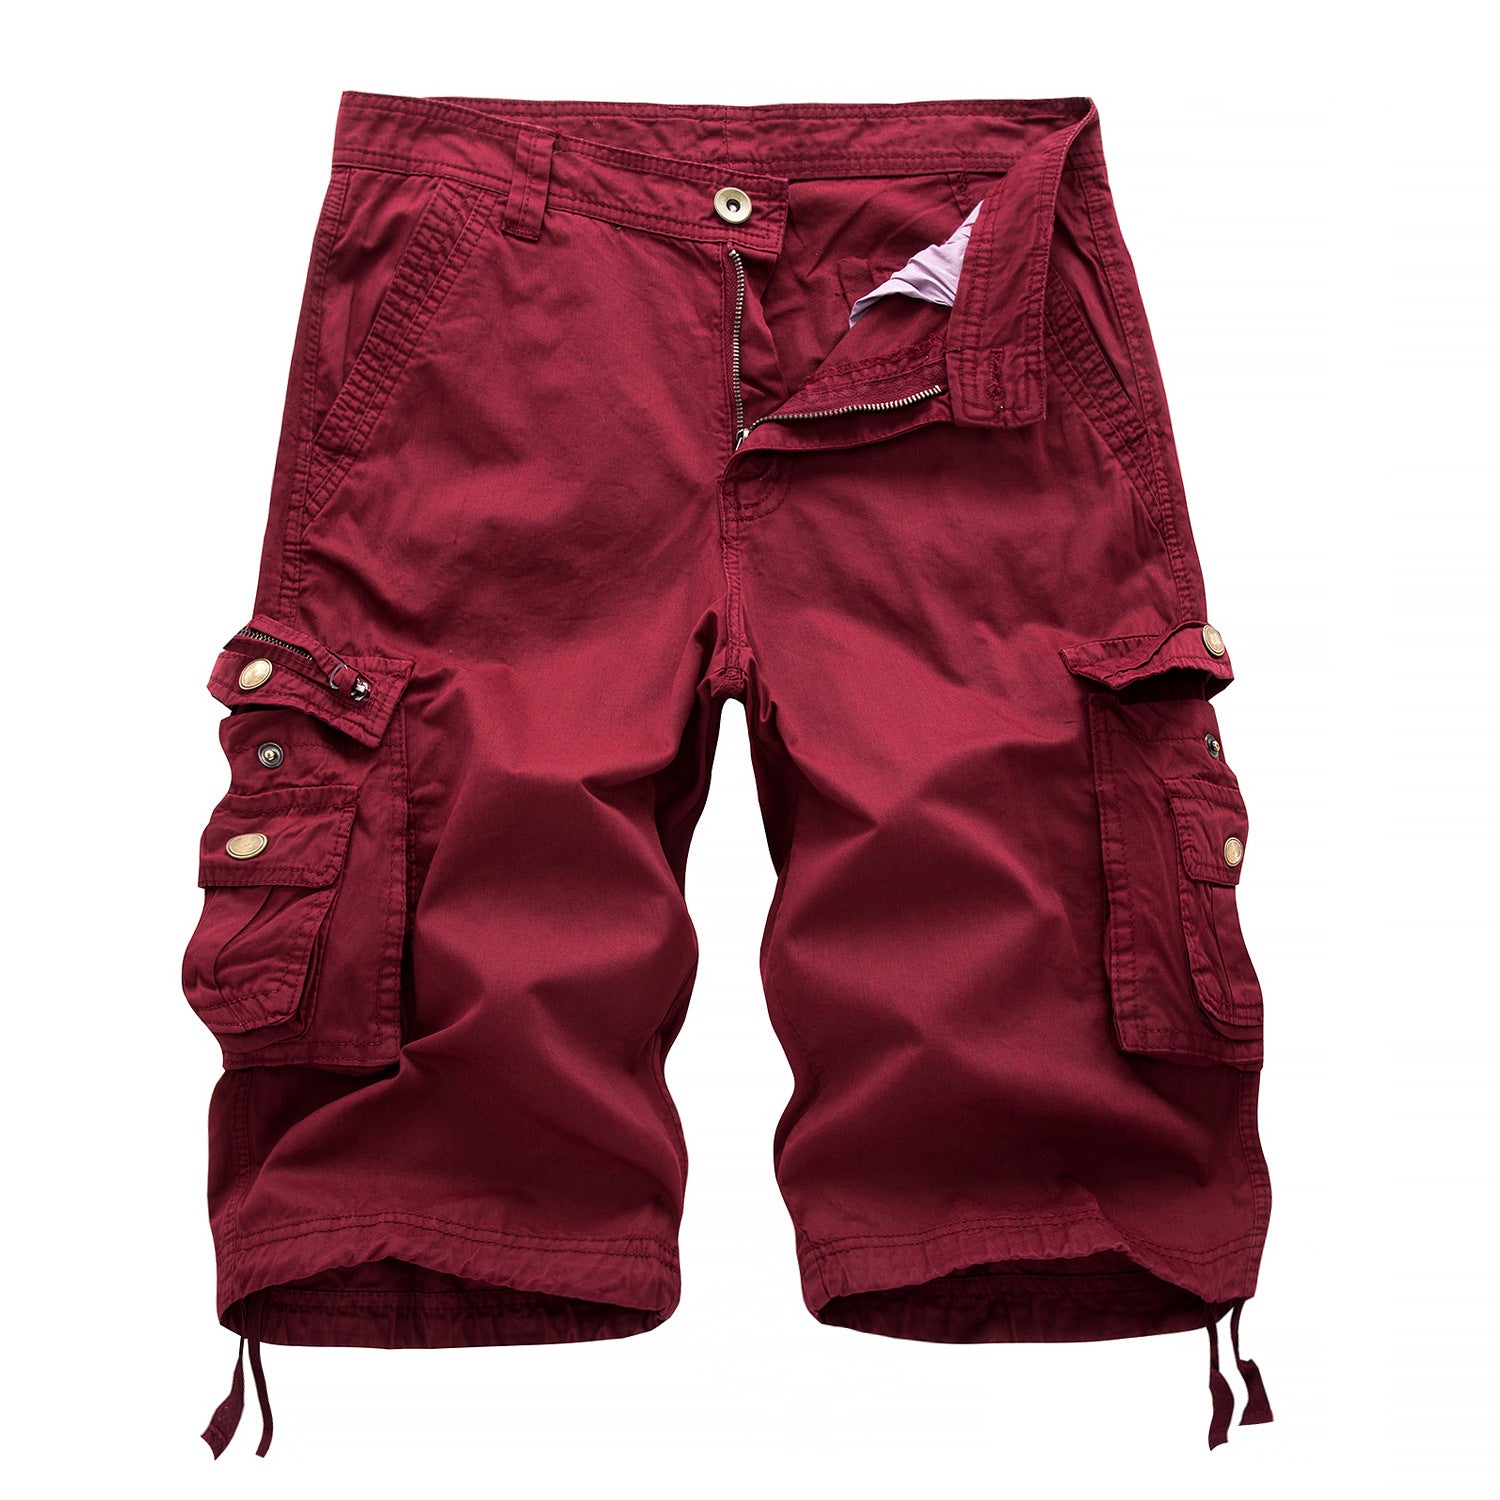 HARDLAND Men's Cotton Twill Cargo Shorts Outdoor Wear Lightweight